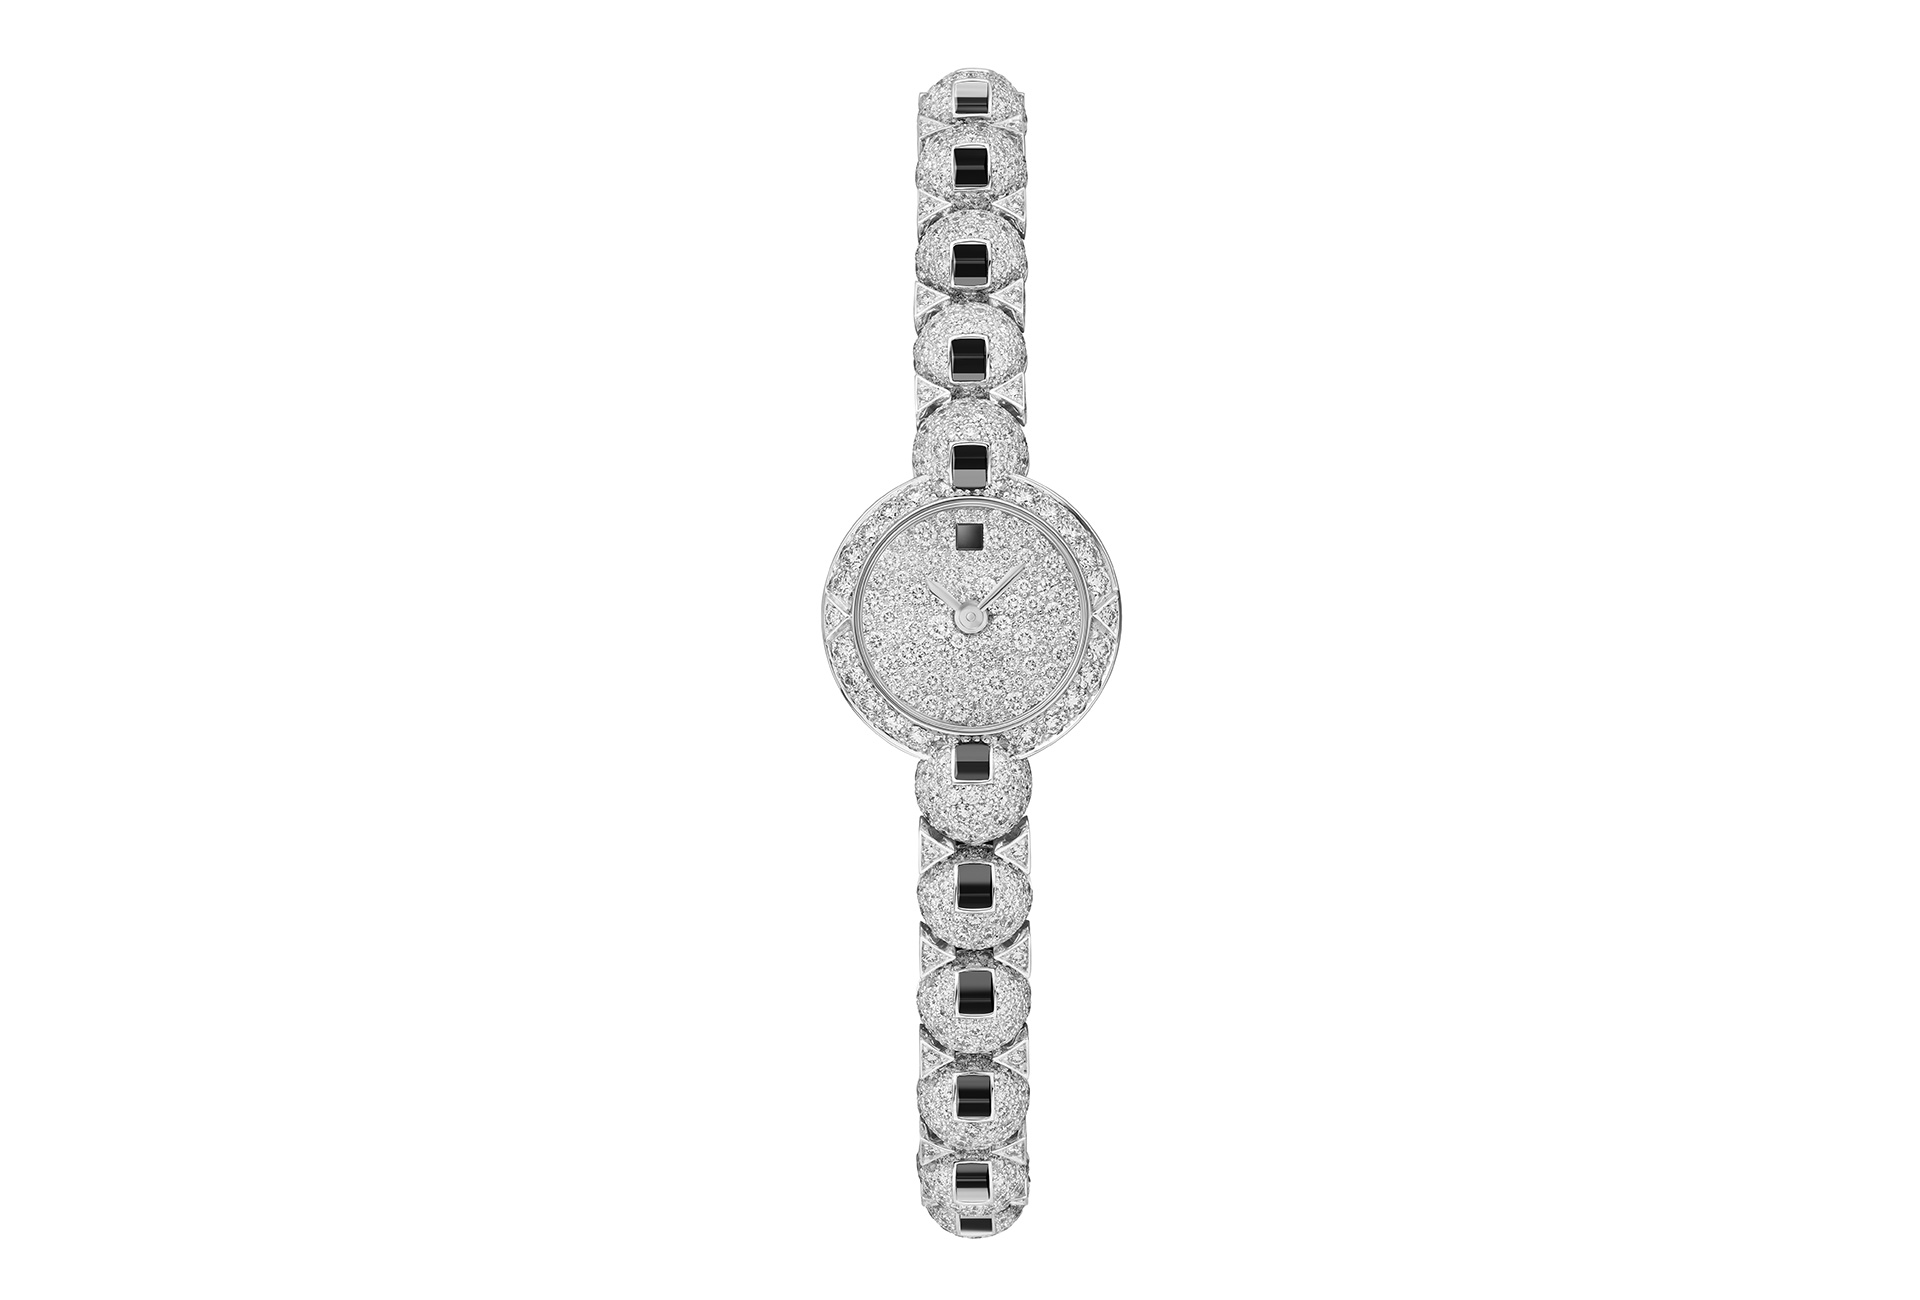 ساعة روزاري Rosary watch من كارتييه Cartier